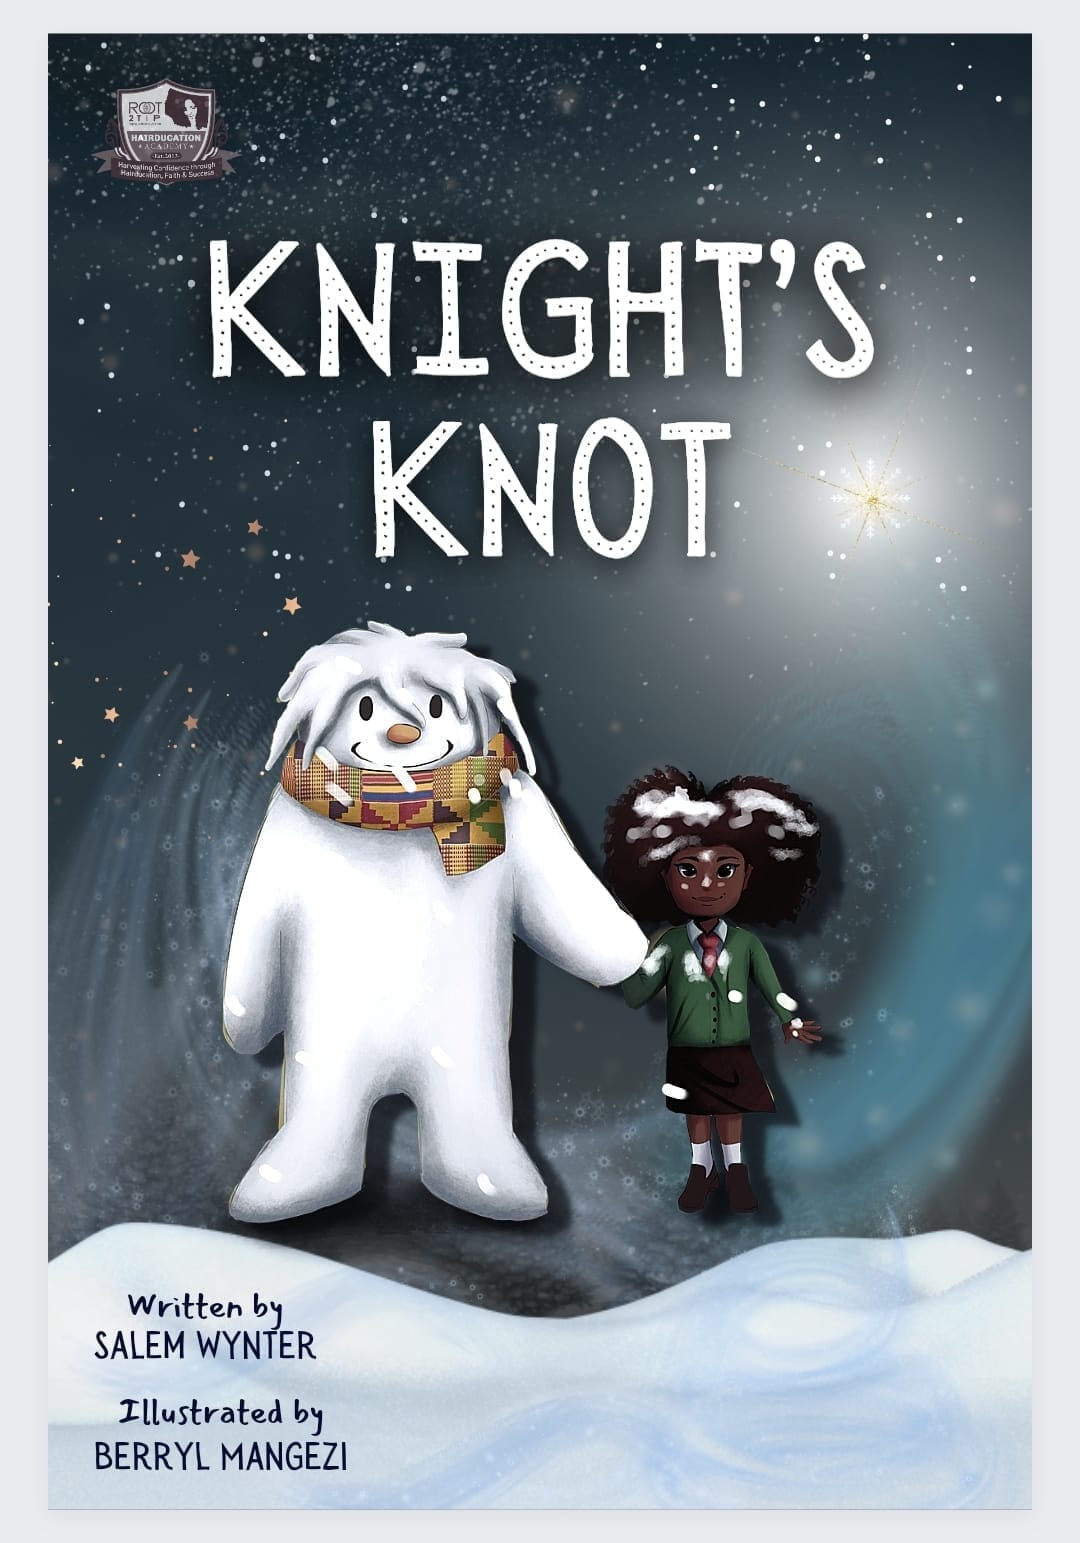 Knight's Knot - Luxury Gift Duo - Free Film